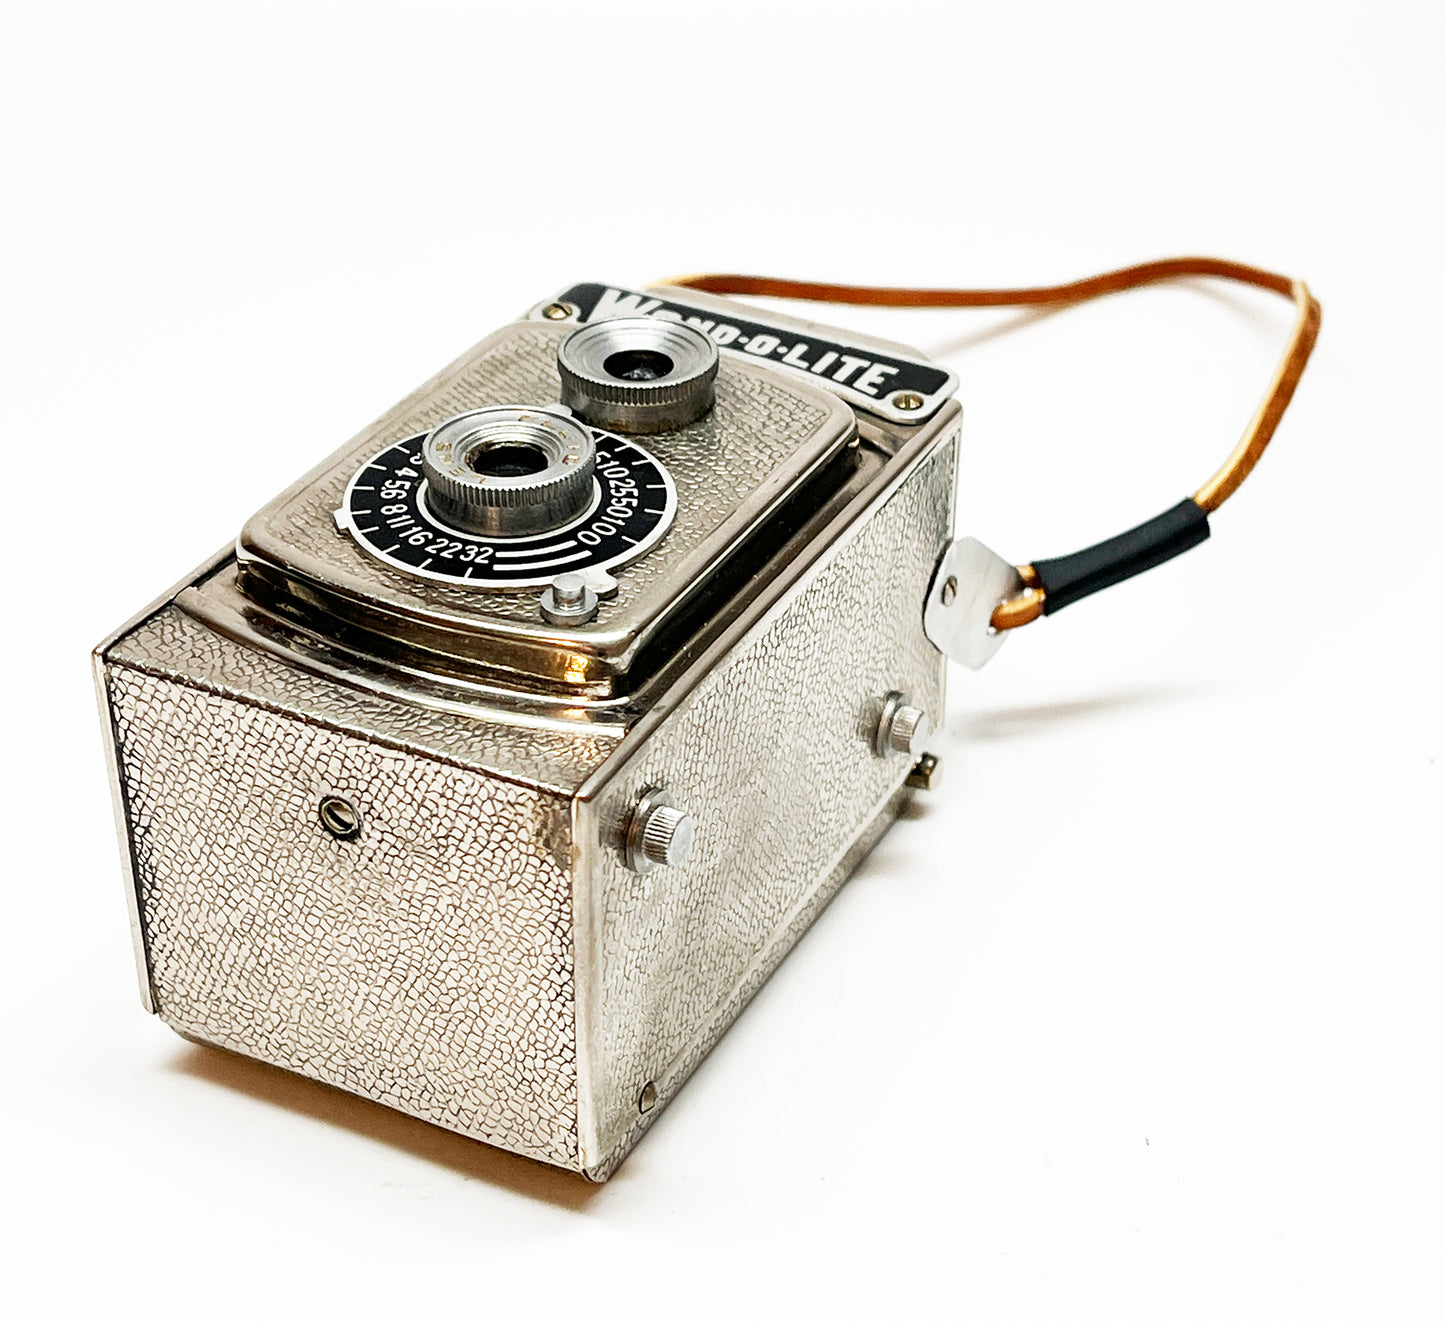 1940s Wond-O-Lite Japanese Camera Shaped Lighter in Original Box